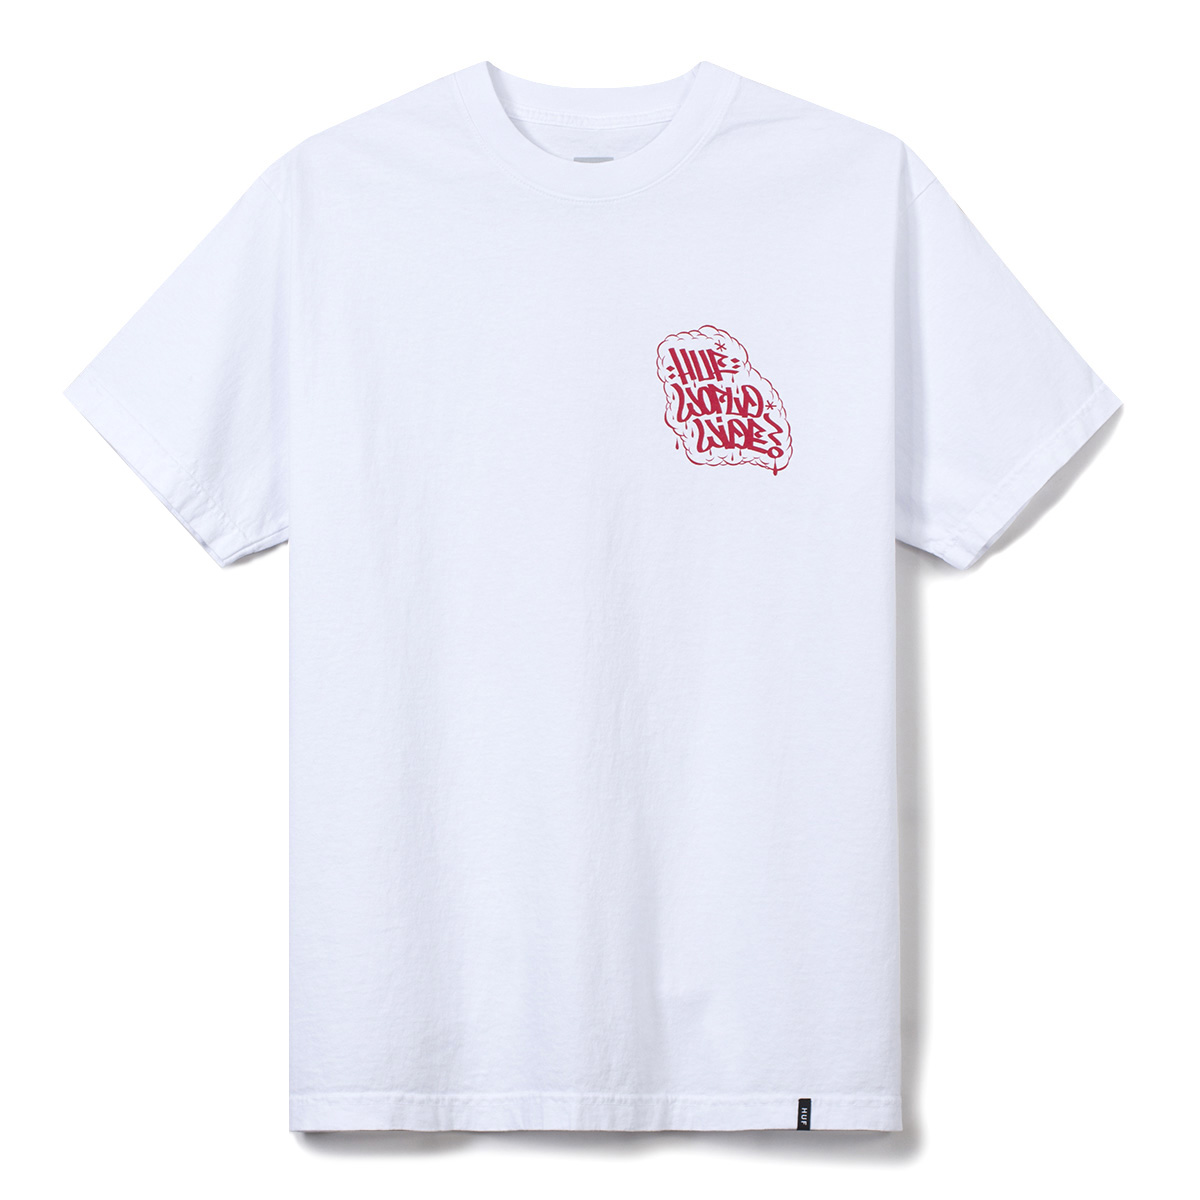 HUF15周年記念TシャツはBarry McGeeとEric HazeとRemioがデザイン ...